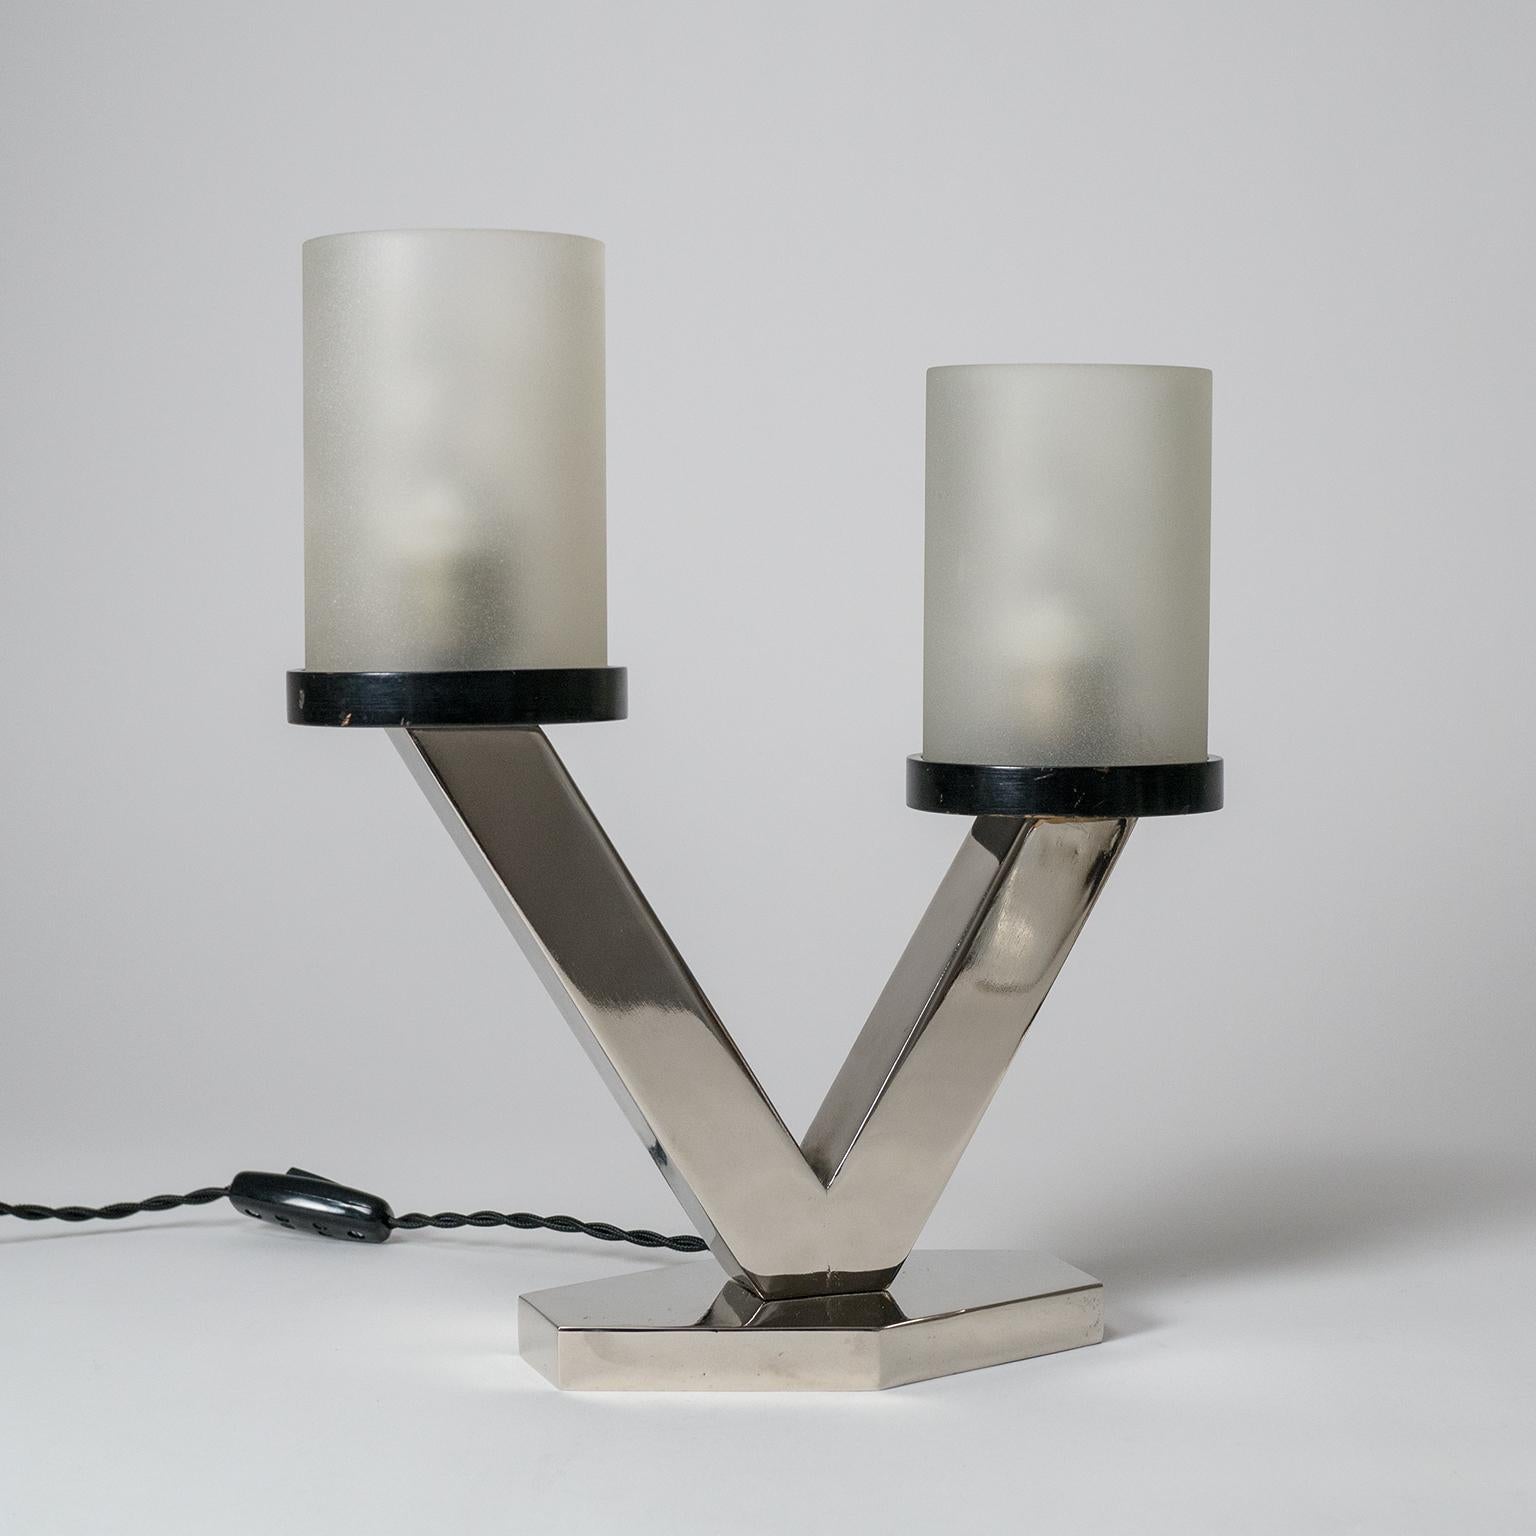 1920s Art Deco Table Lamps, Nickel and Glass (Mattiert)